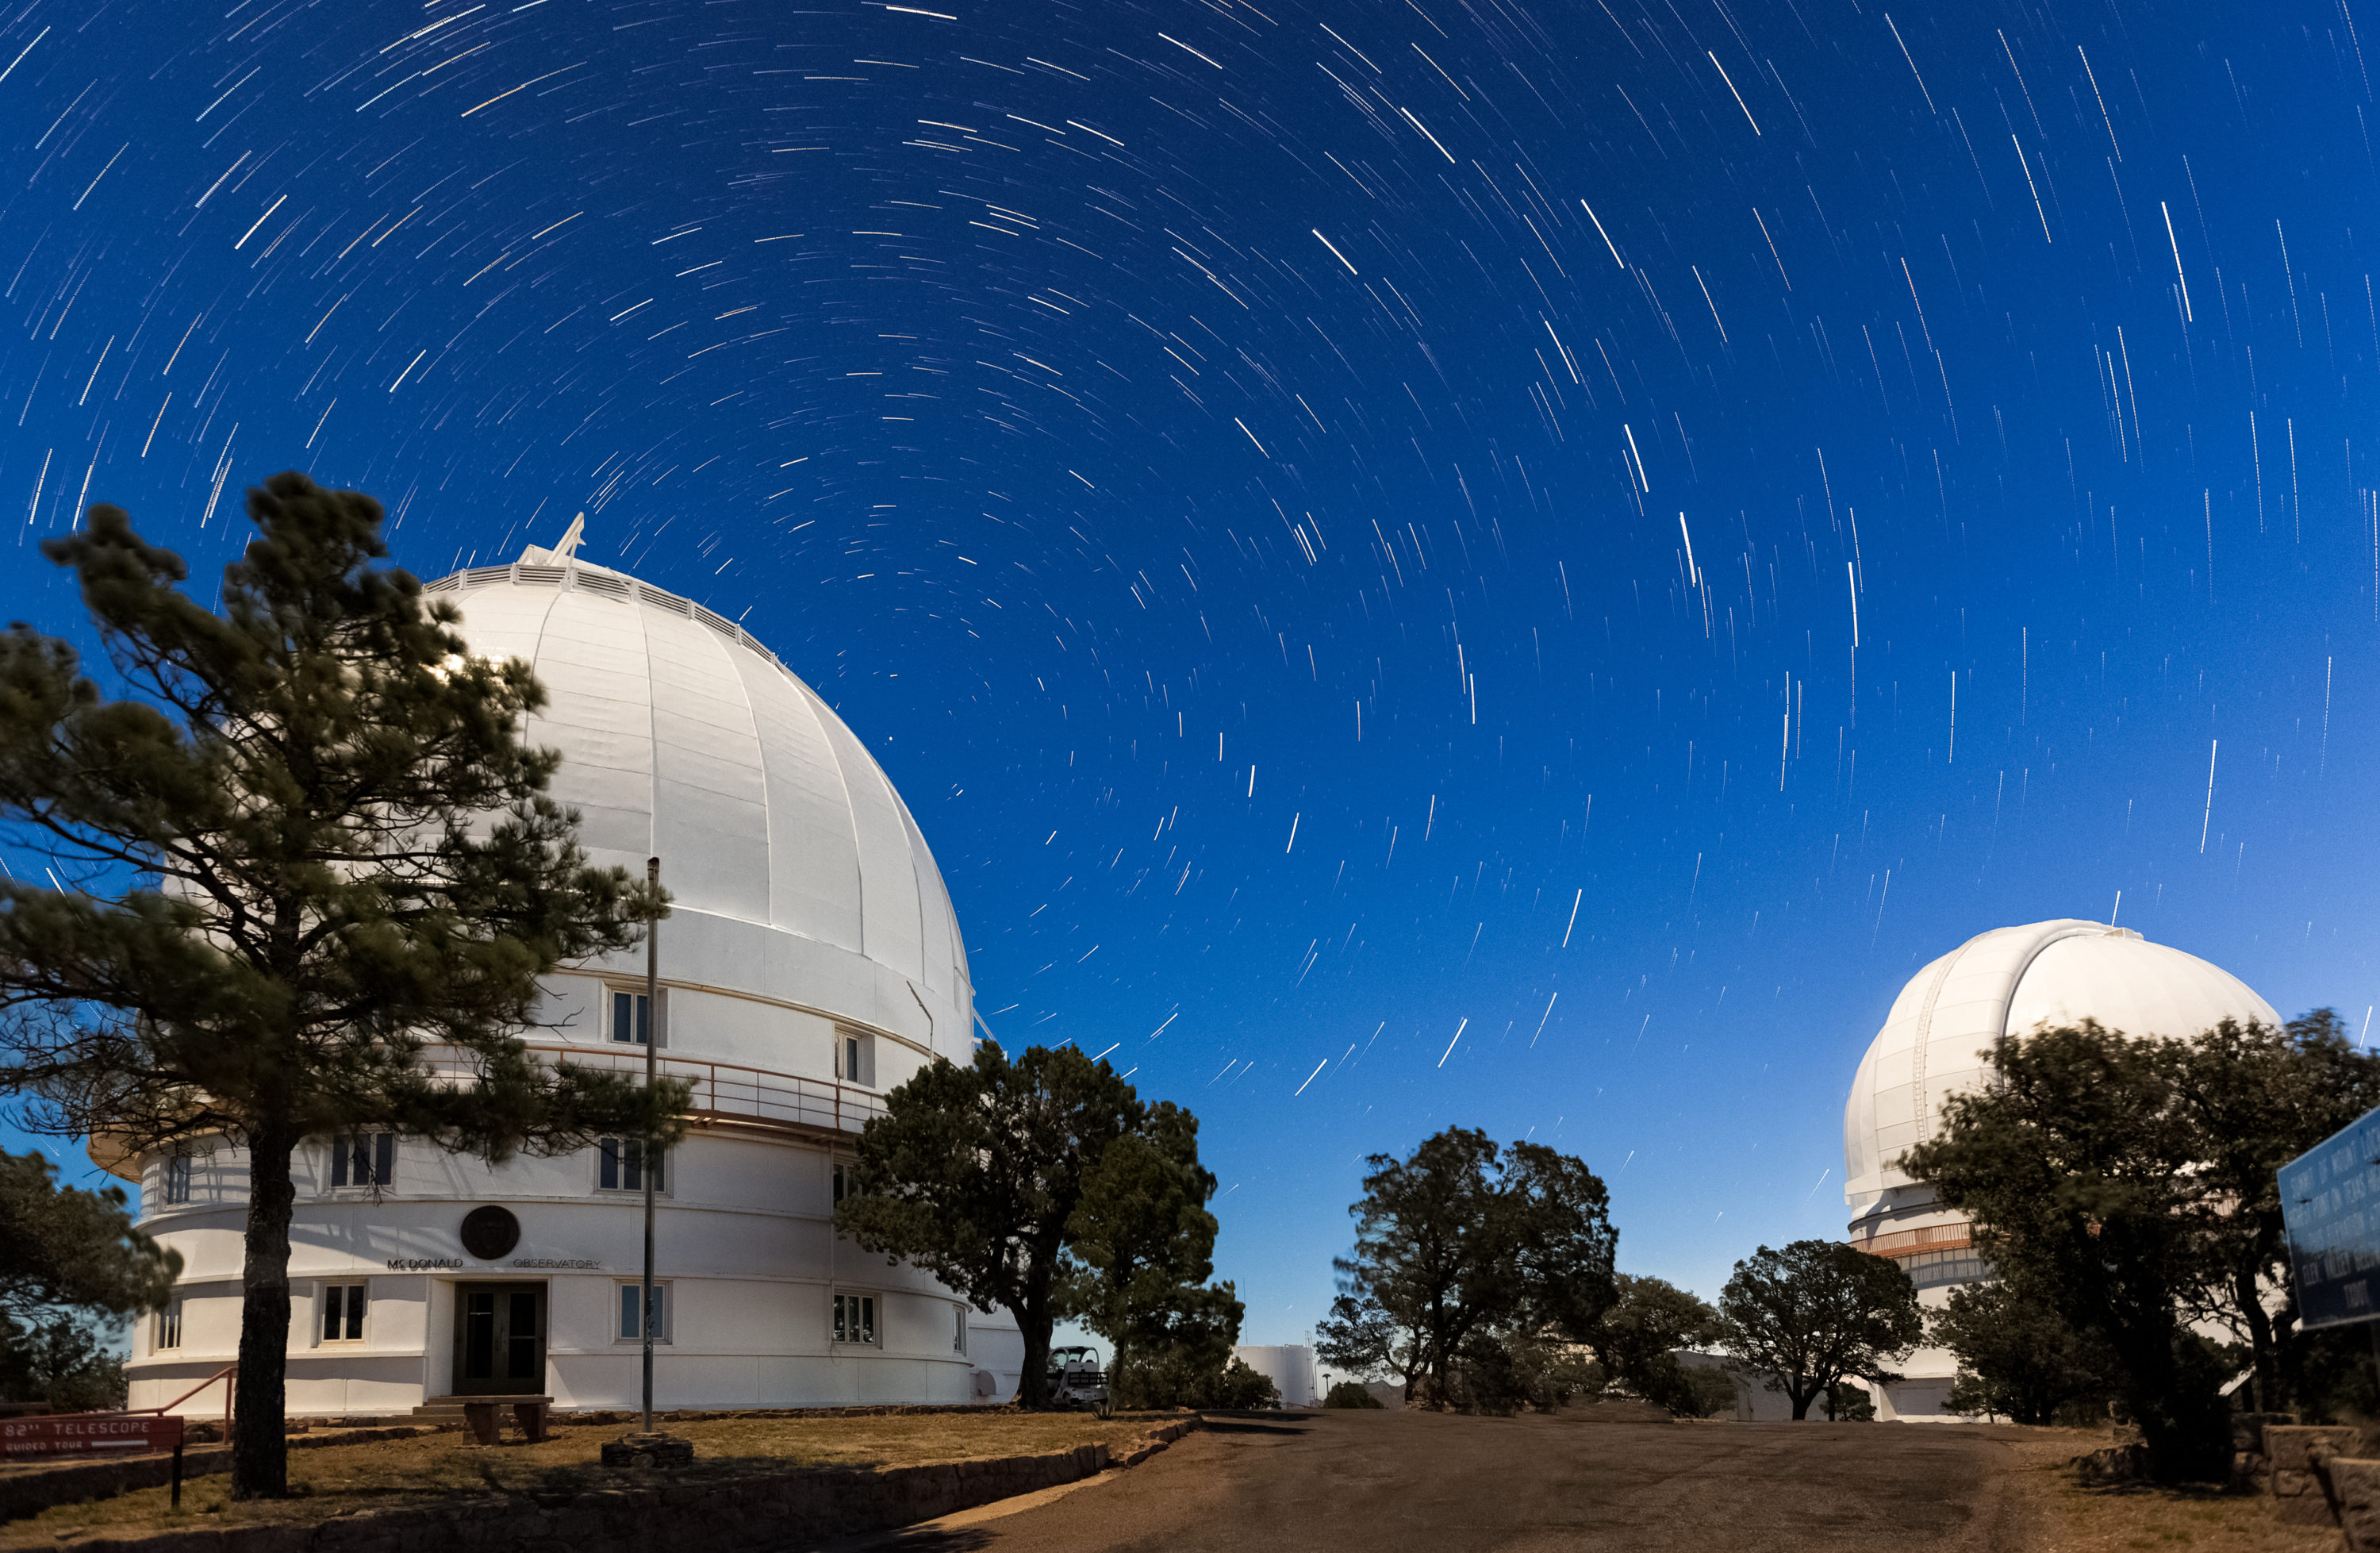 mcdonald observatory texas